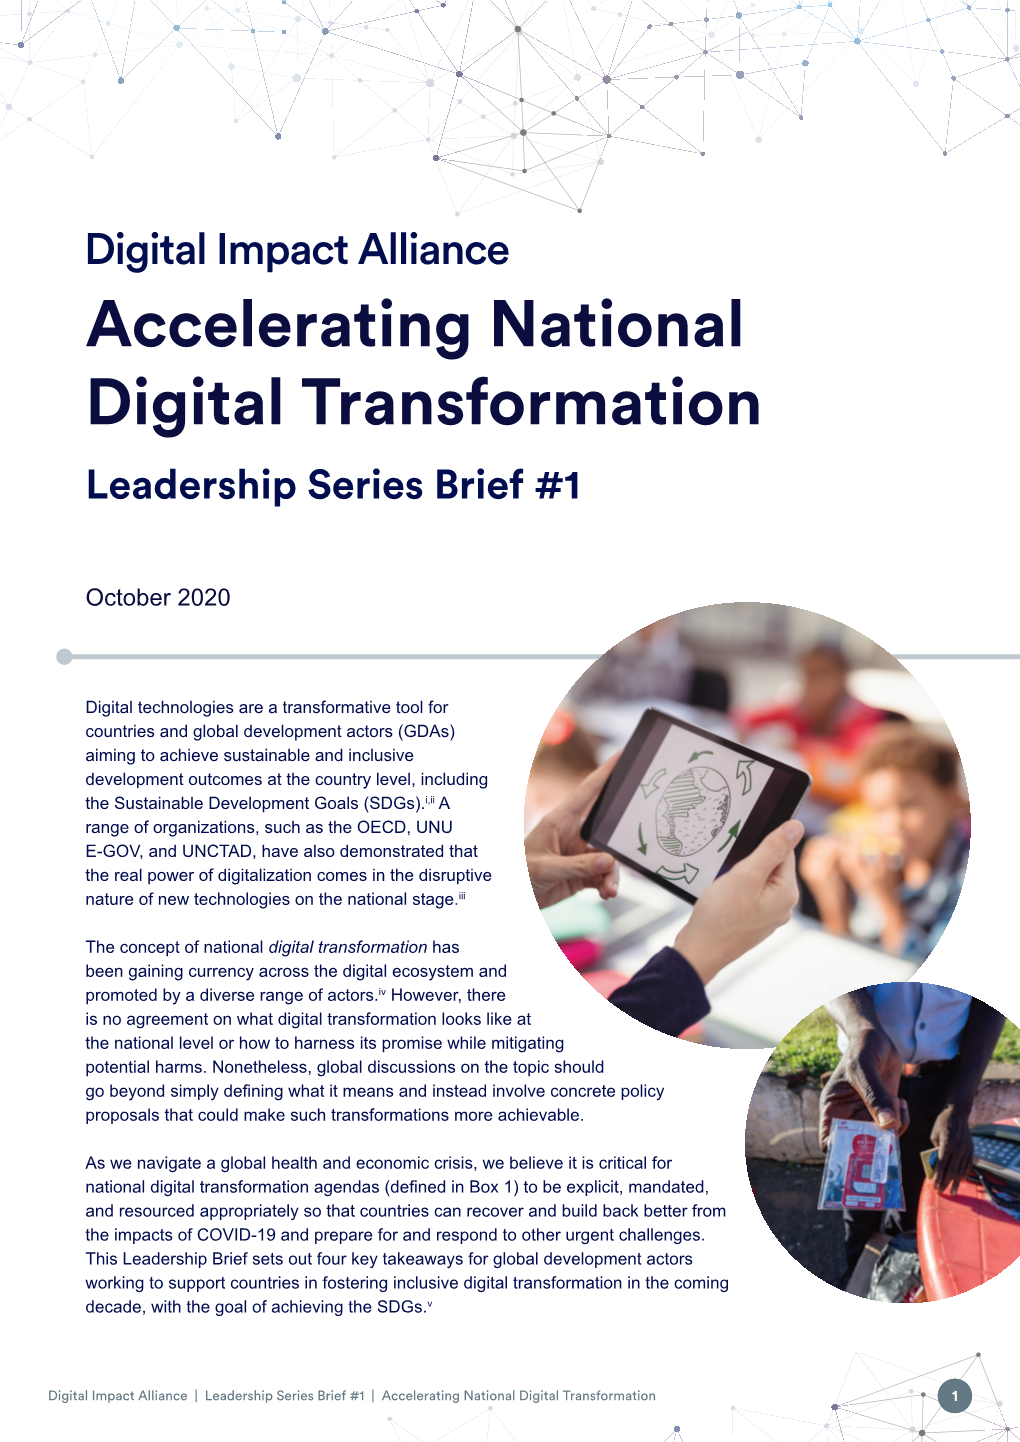 National Digital Transformation Agendas